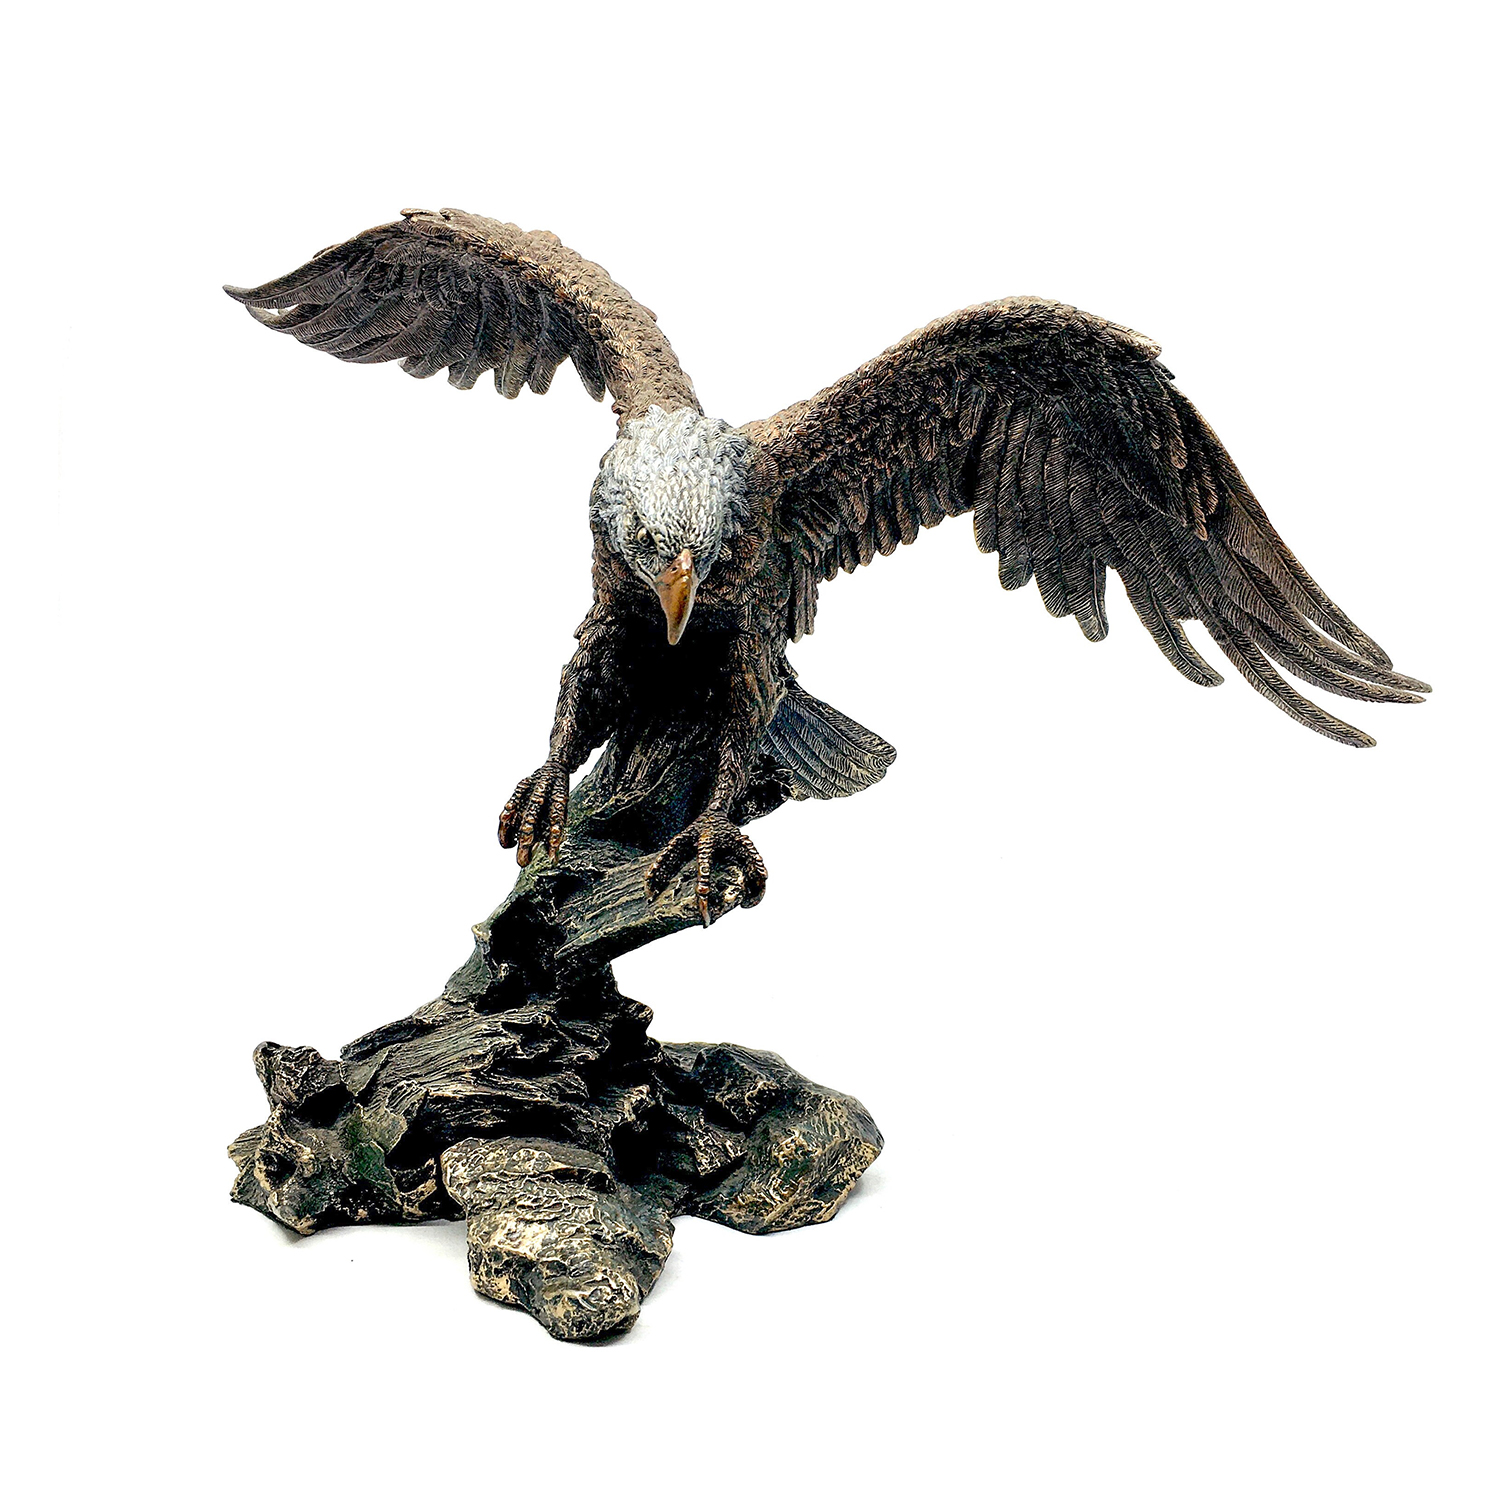 American Eagle Figurine